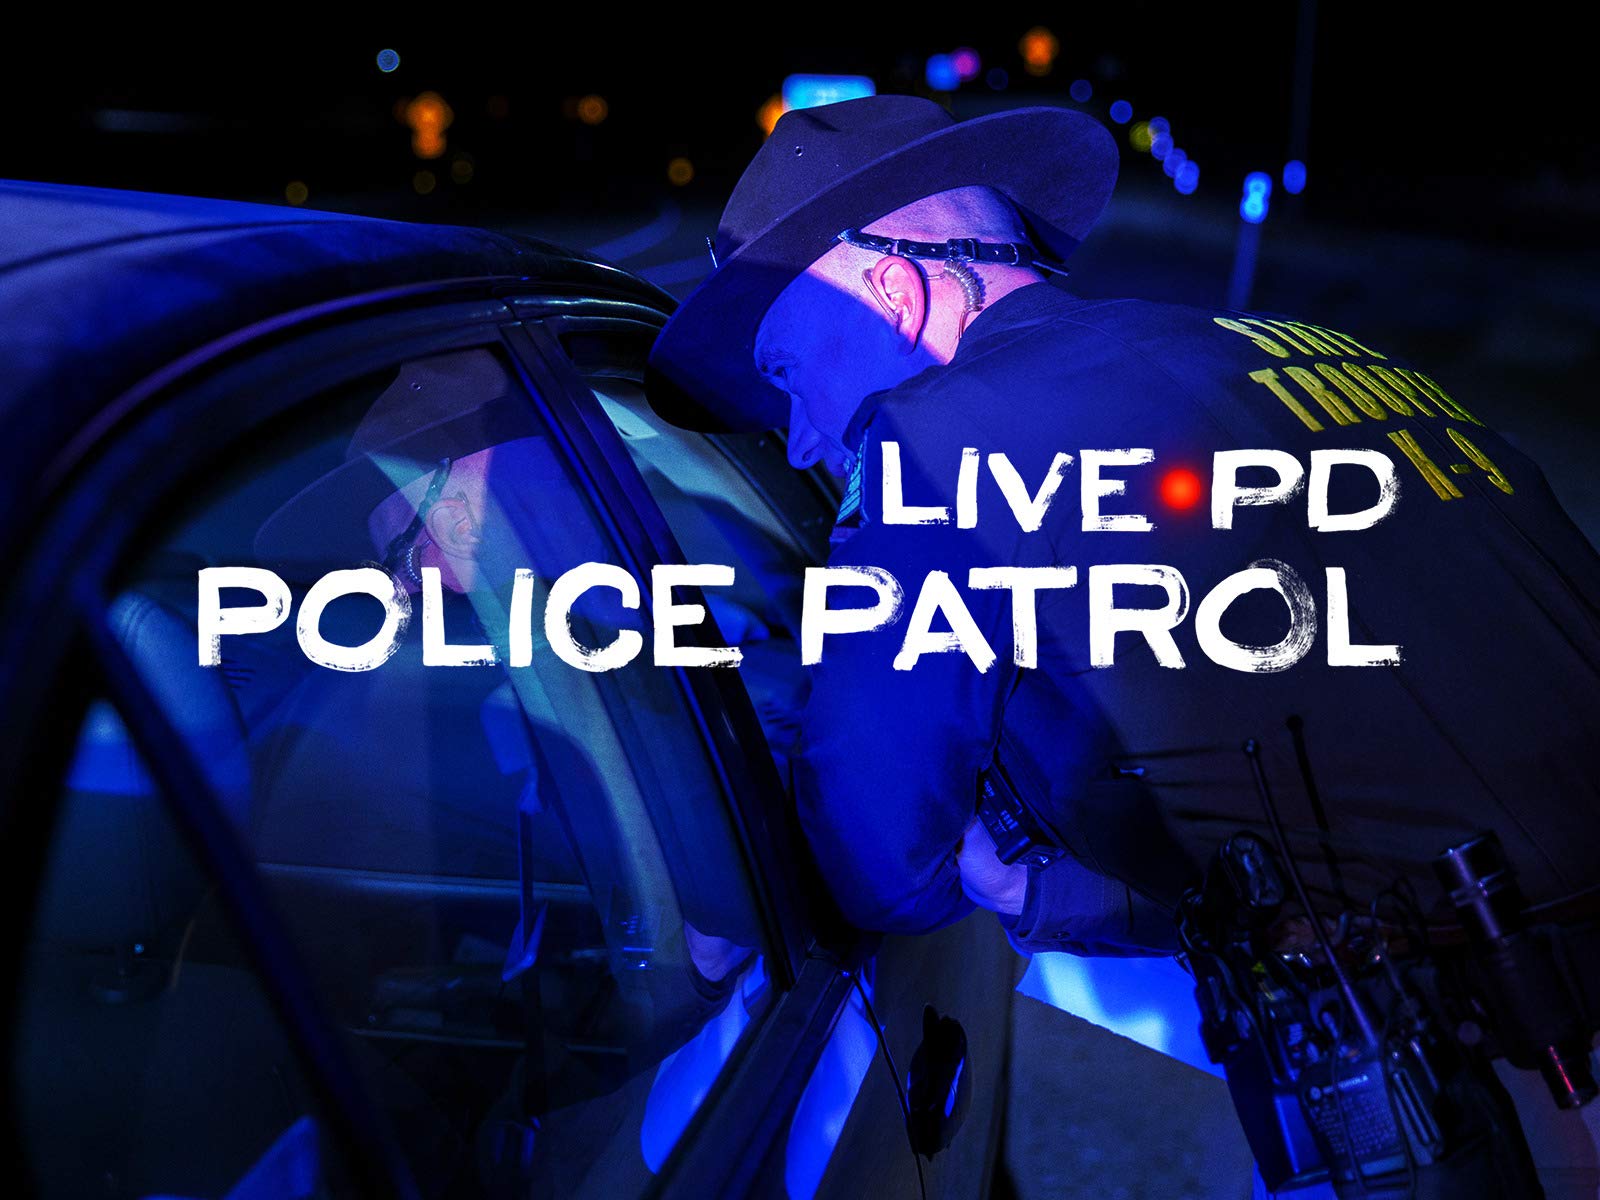 Watch Live PD: Police Patrol - Season 5